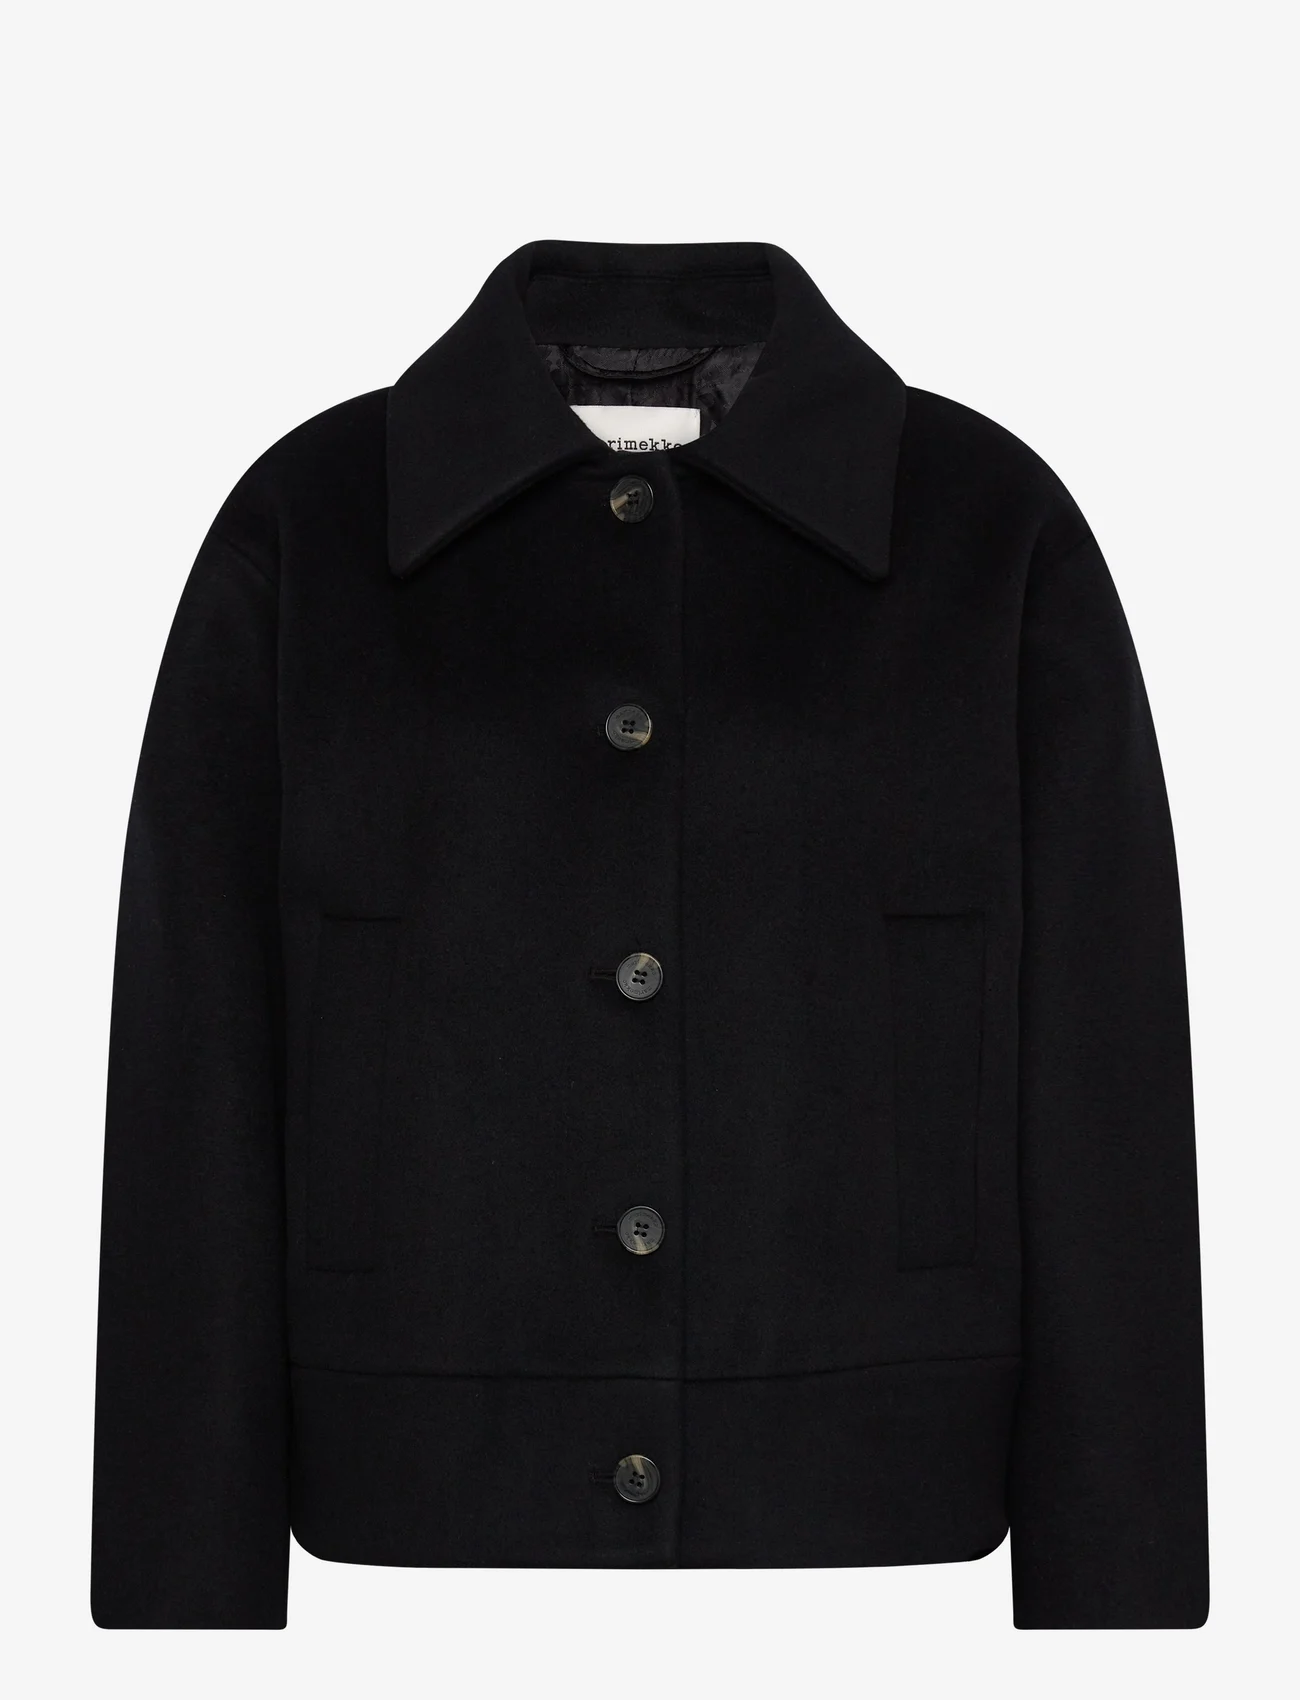 Marimekko - ASETELMA SOLID - winter jackets - black - 0